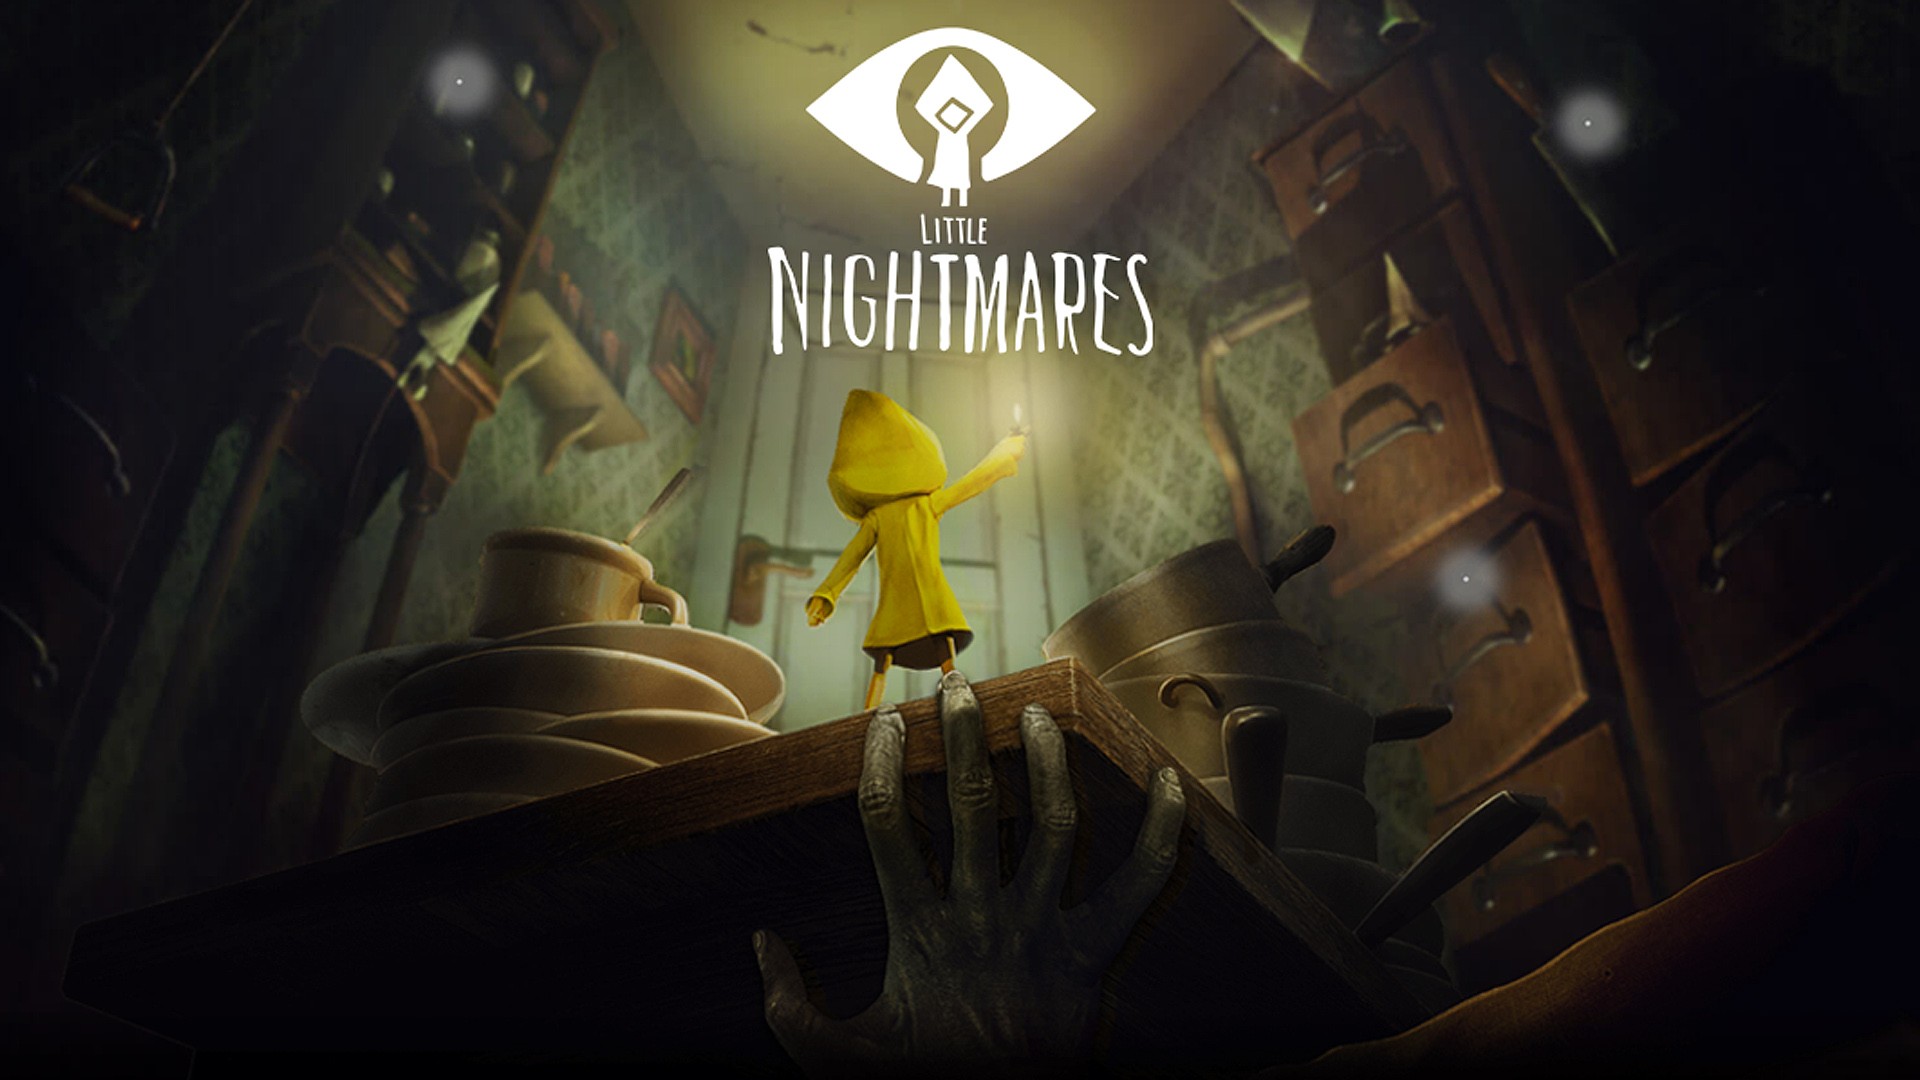 Little Nightmares está gratuito no Steam por tempo limitado - NerdBunker